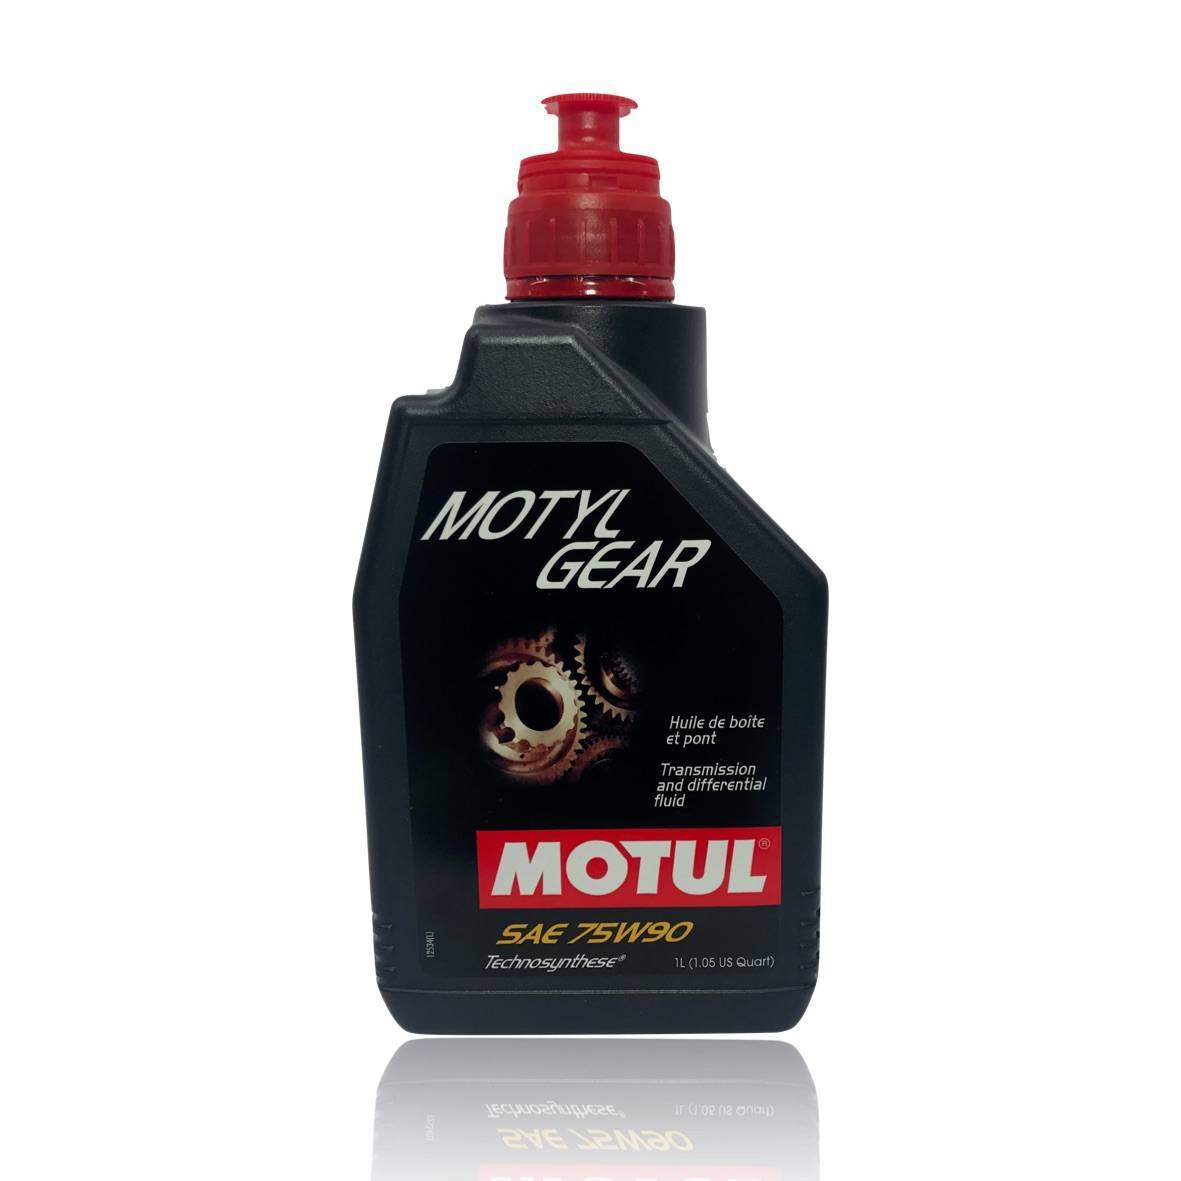 Motul Motylgear 75W90 (API GL-4/GL-5) - 1 litro - PerformanceLUB Lubrificantes Premium